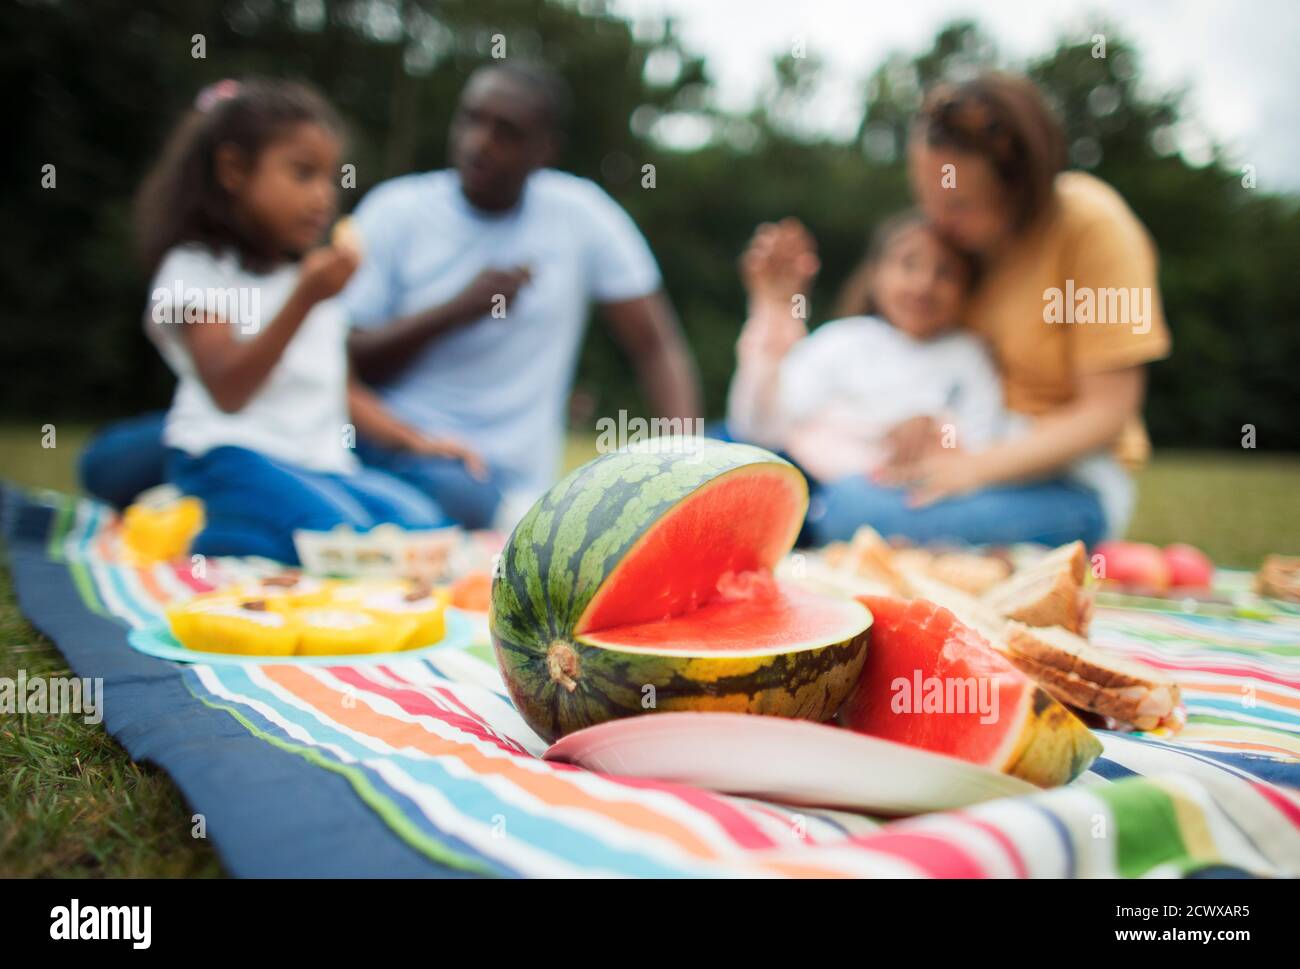 Family enjoying fresh watermelon on picnic blanket in park Stock Photo